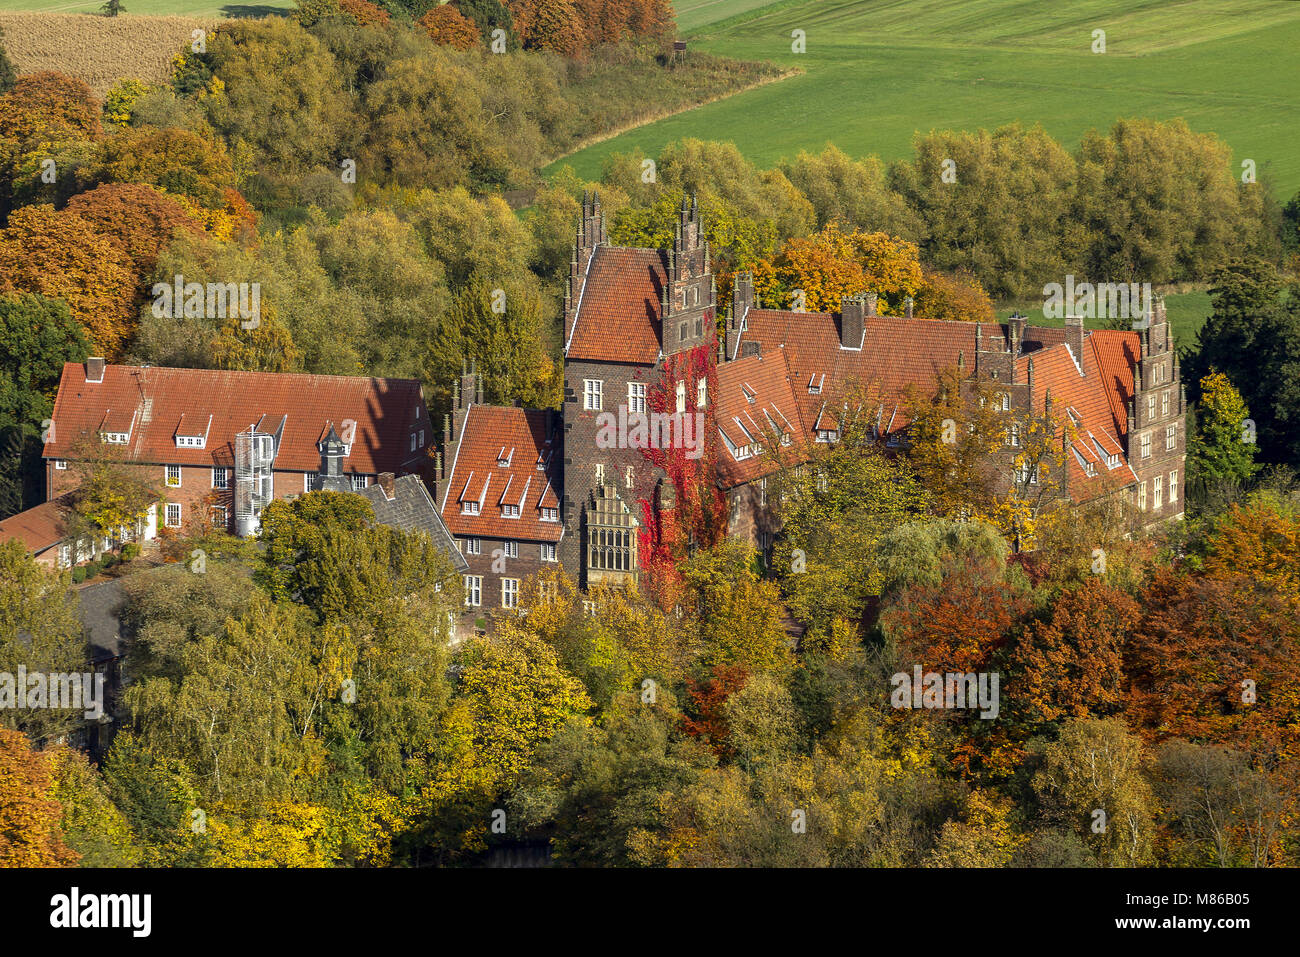 Aerial view, castle Heessen in autumn leaves, boarding school, moated castle, Hamm, Ruhr area, North Rhine-Westphalia, Germany, Europe, birds-eyes vie Stock Photo